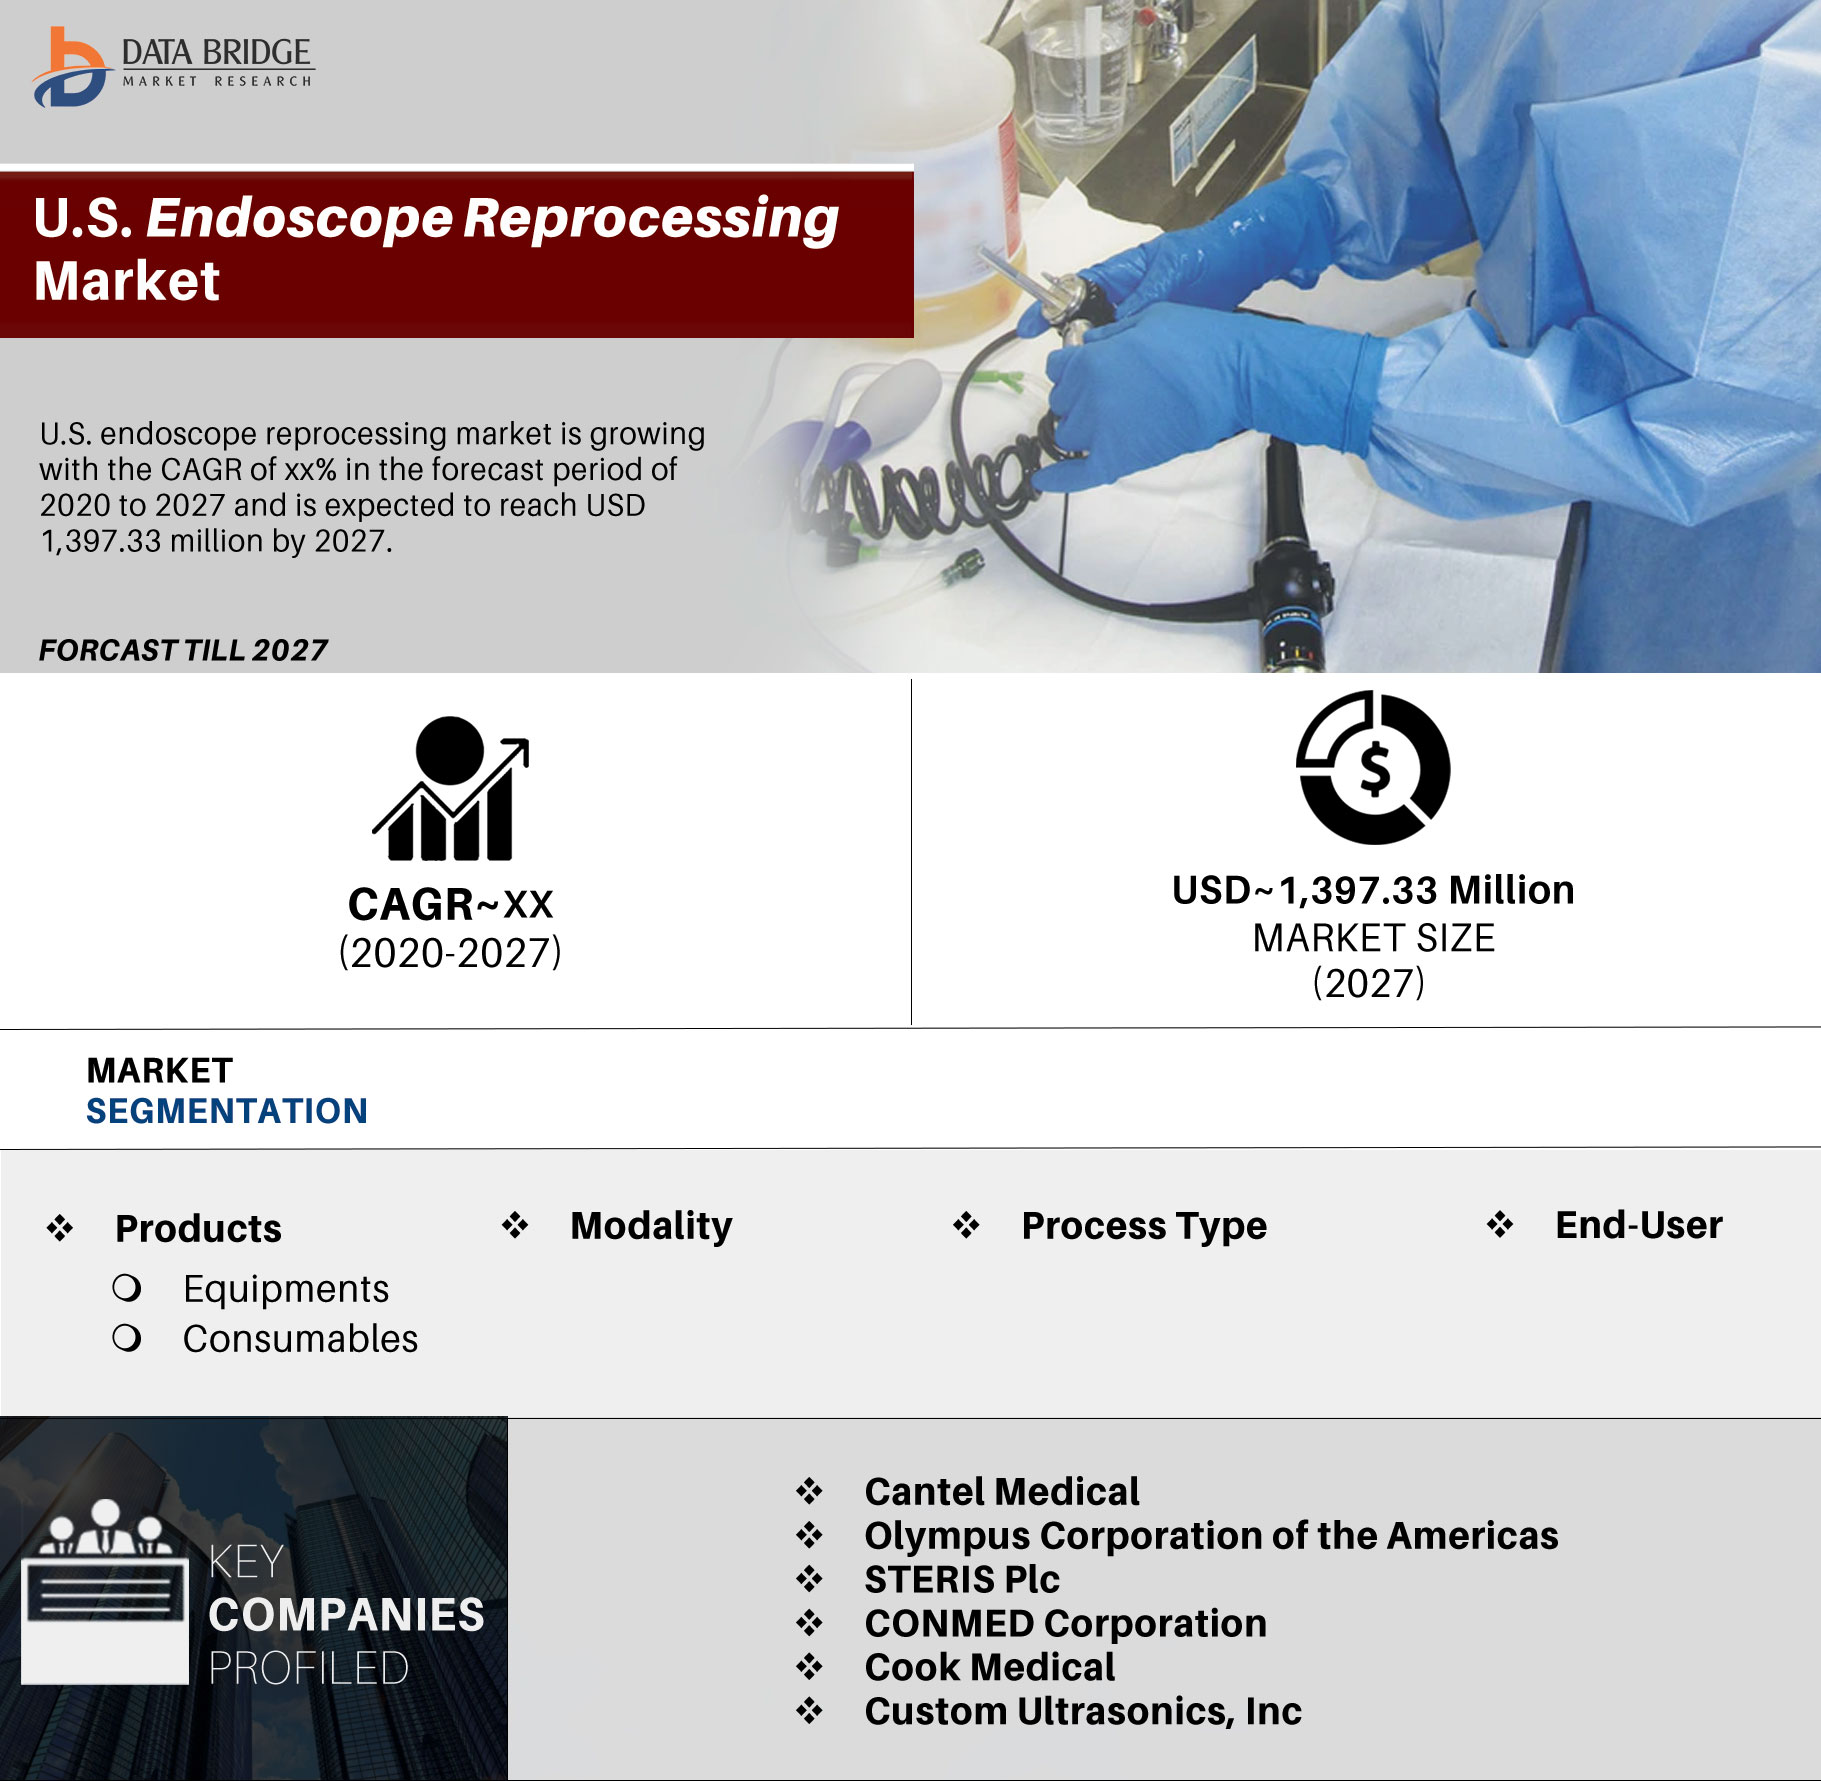 U.S. Endoscope Reprocessing Market